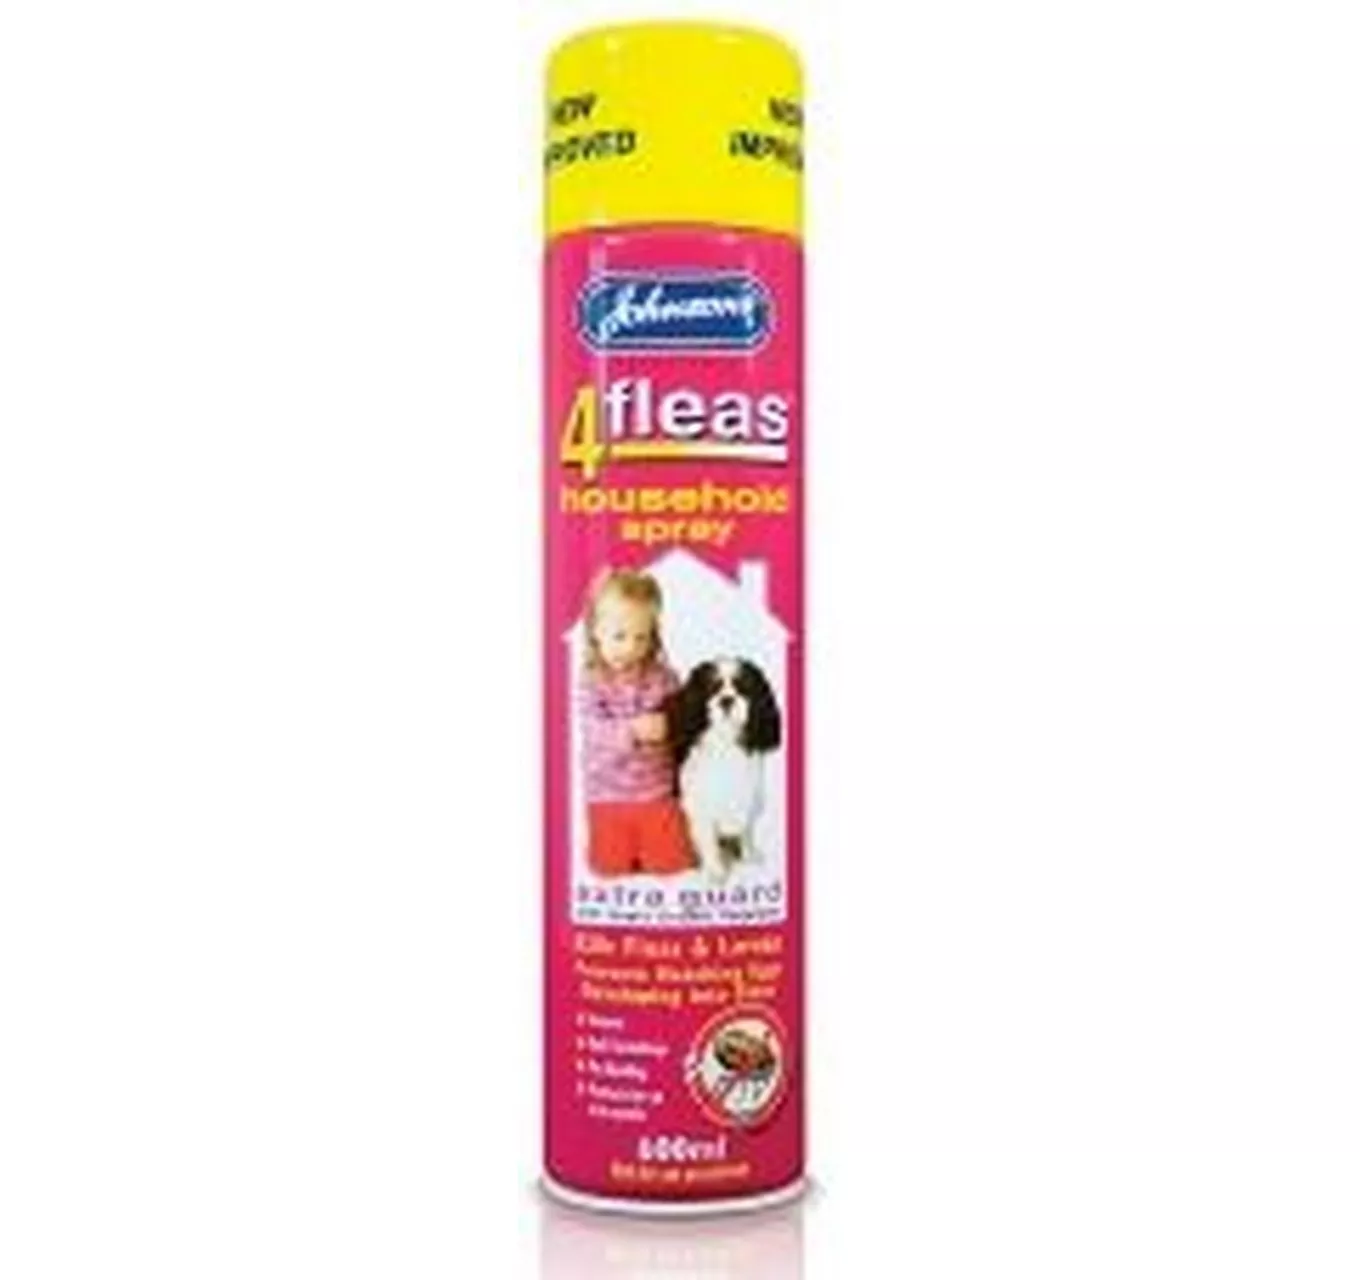 4 Fleas Household Spray 600ml